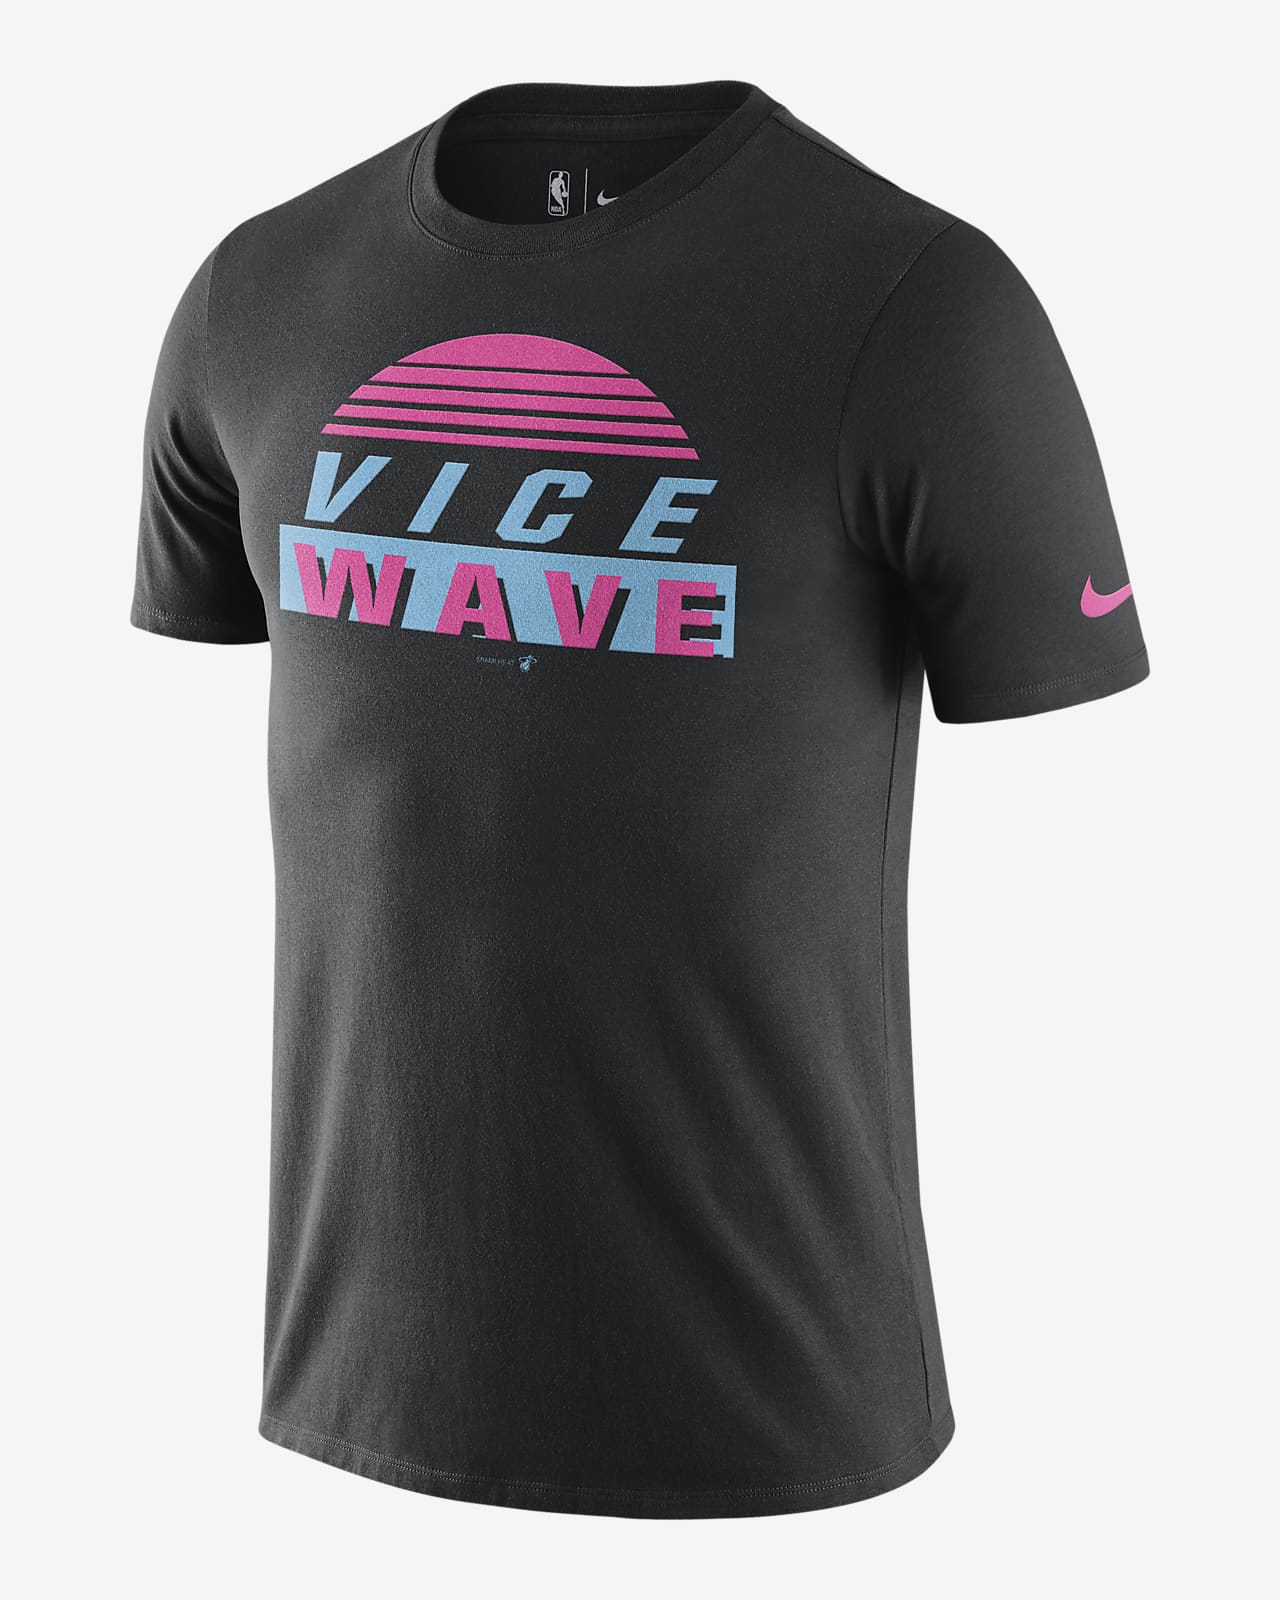 Miami Heat Vice' Men's T-Shirt